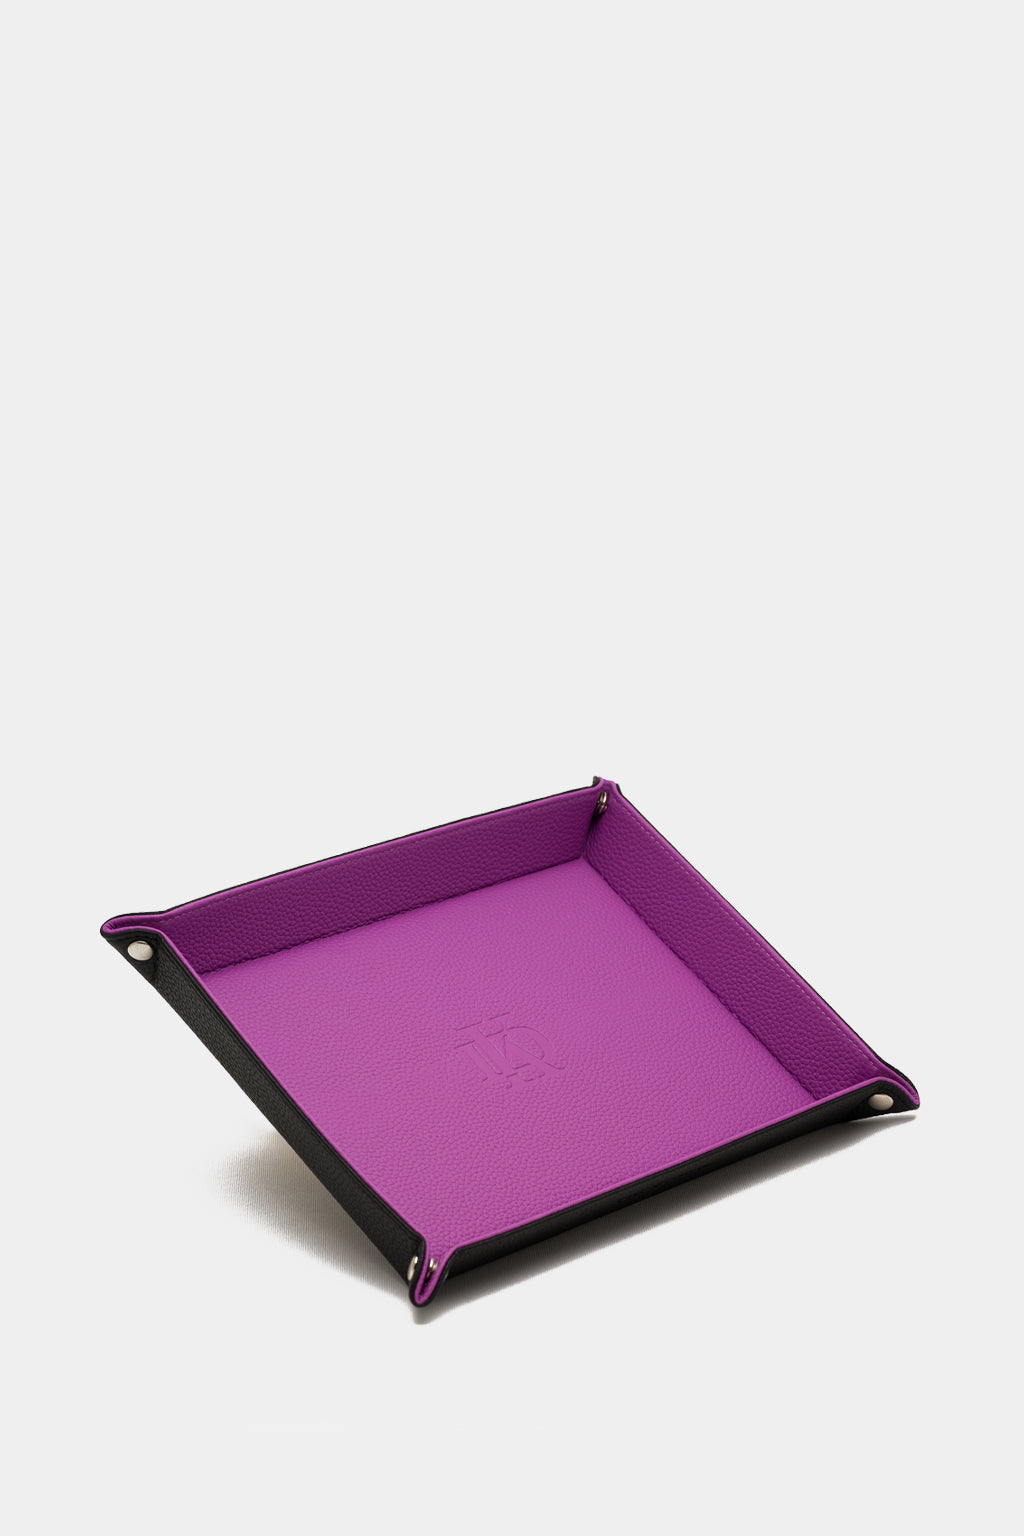 Kastro Design - Valet Tray Provence Purple